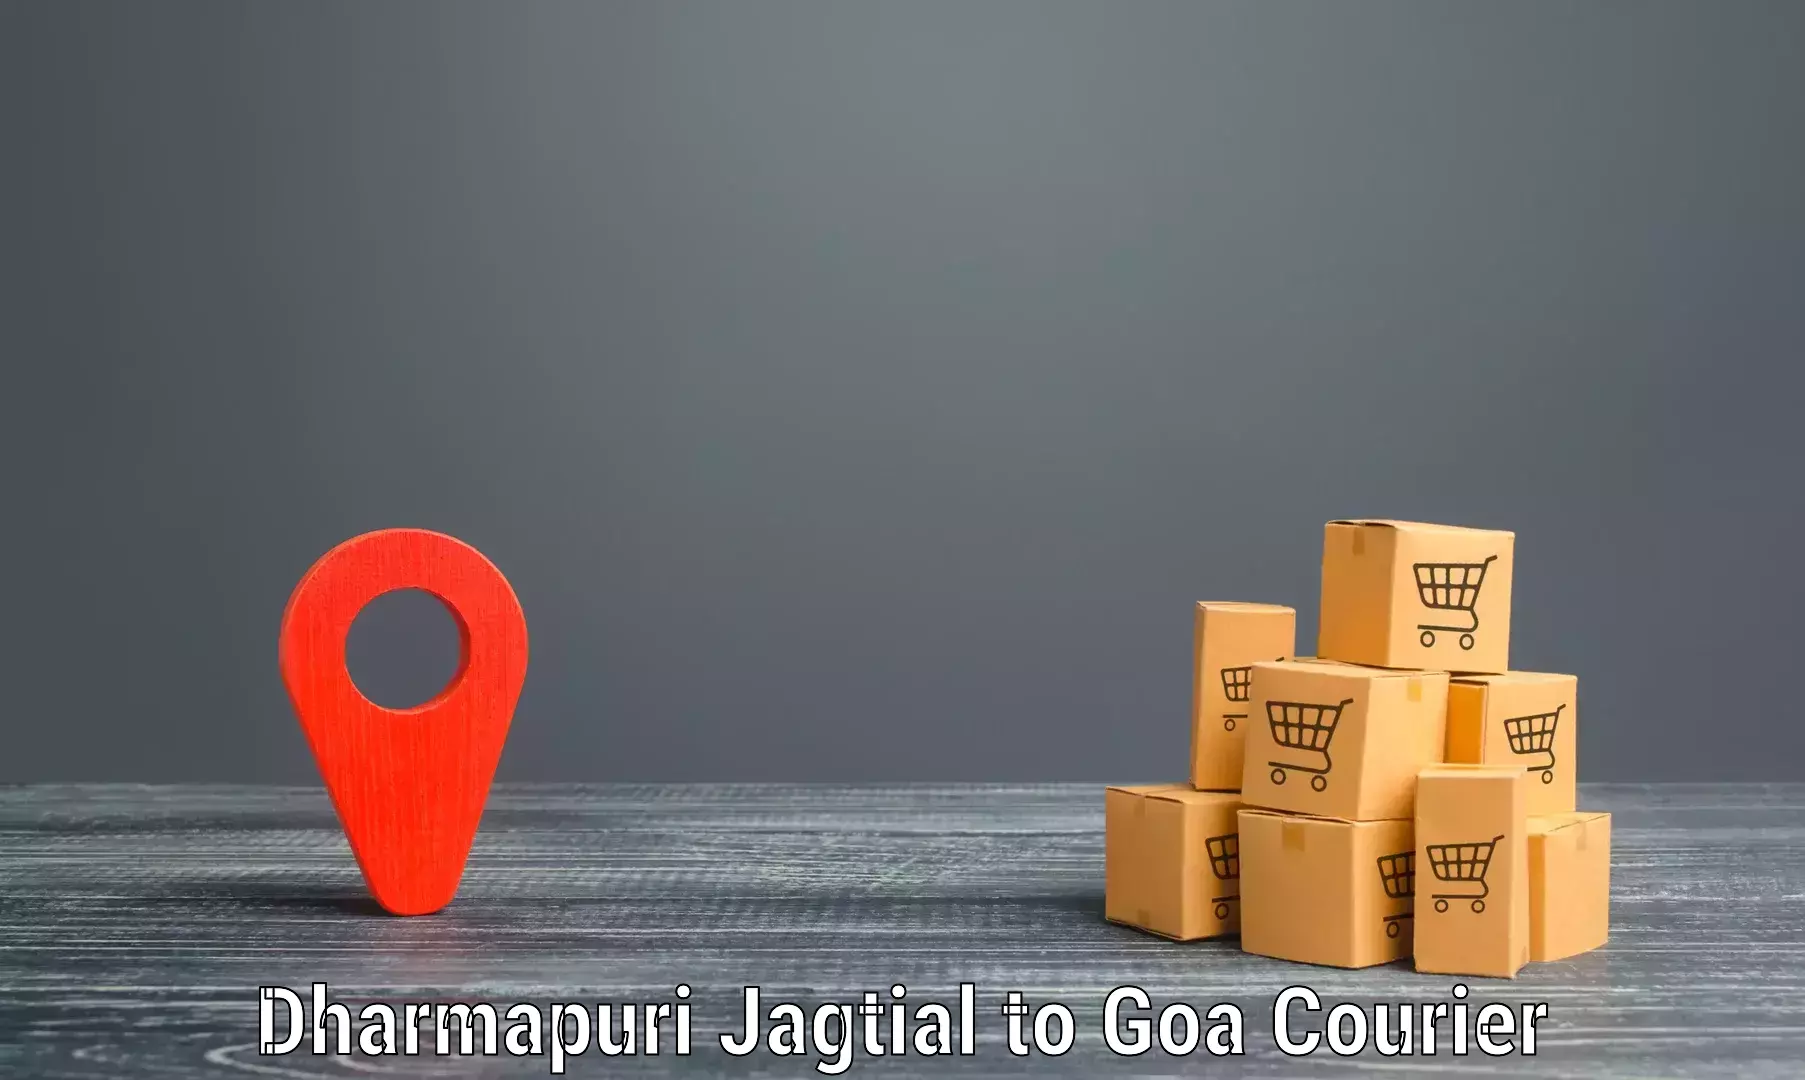 Global logistics network Dharmapuri Jagtial to Margao